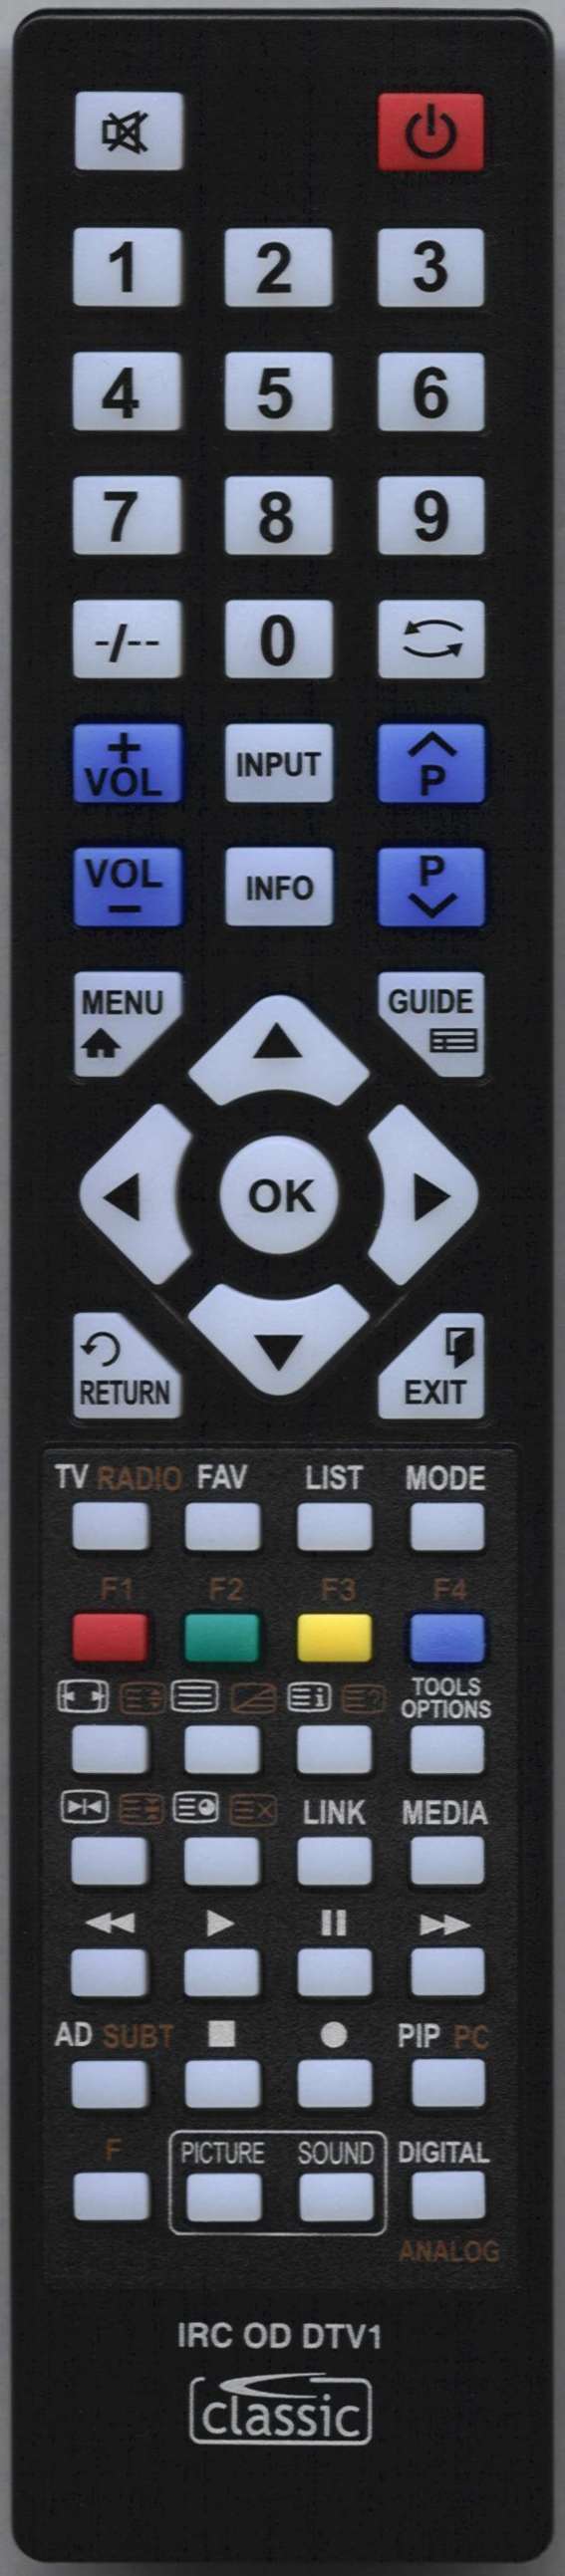 TEVION MD30180 Remote Control